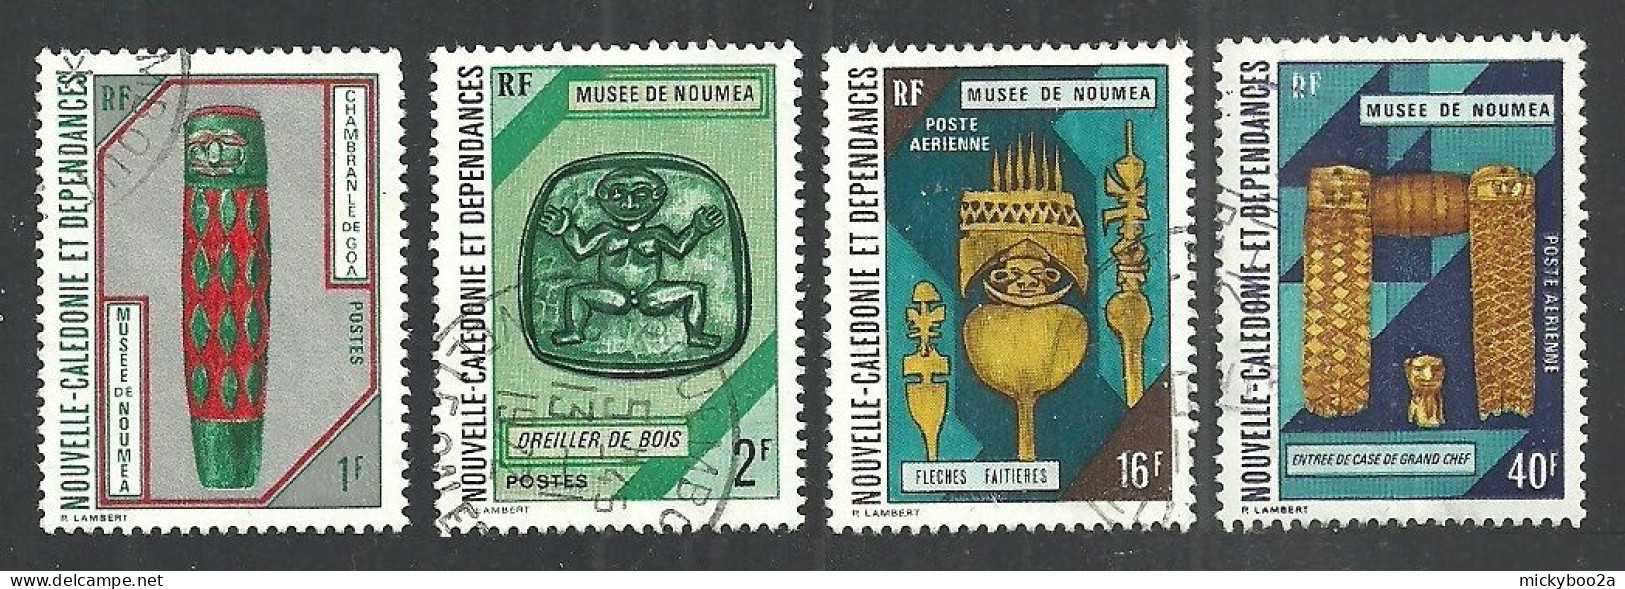 NEW CALEDONIA 1972 NOUMEA MUSEUM EXHIBITS VALUES USED - Gebruikt